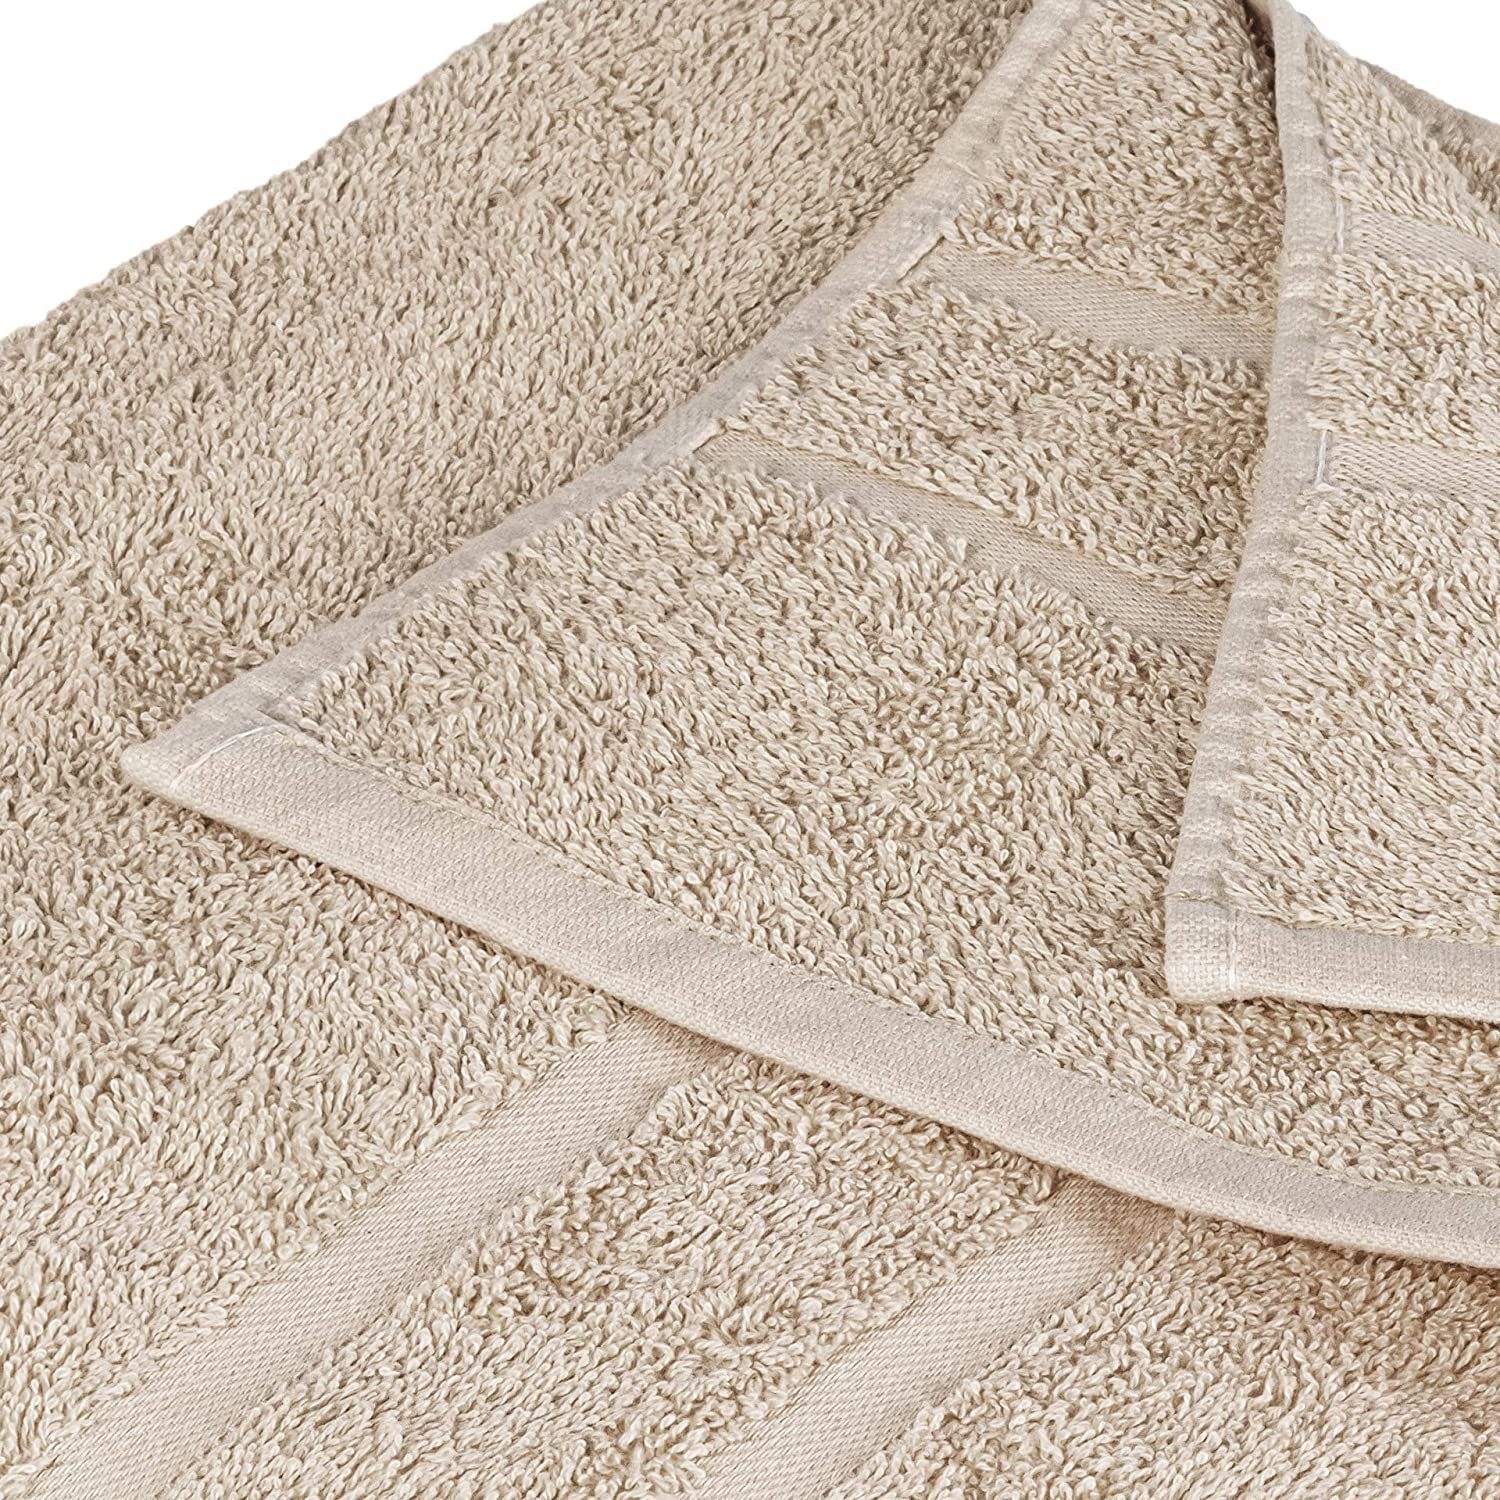 Saunatücher Sand Baumwolle Handtücher Wahl Badetücher StickandShine in 100% 500 GSM zur Handtuch Duschtücher Gästehandtücher